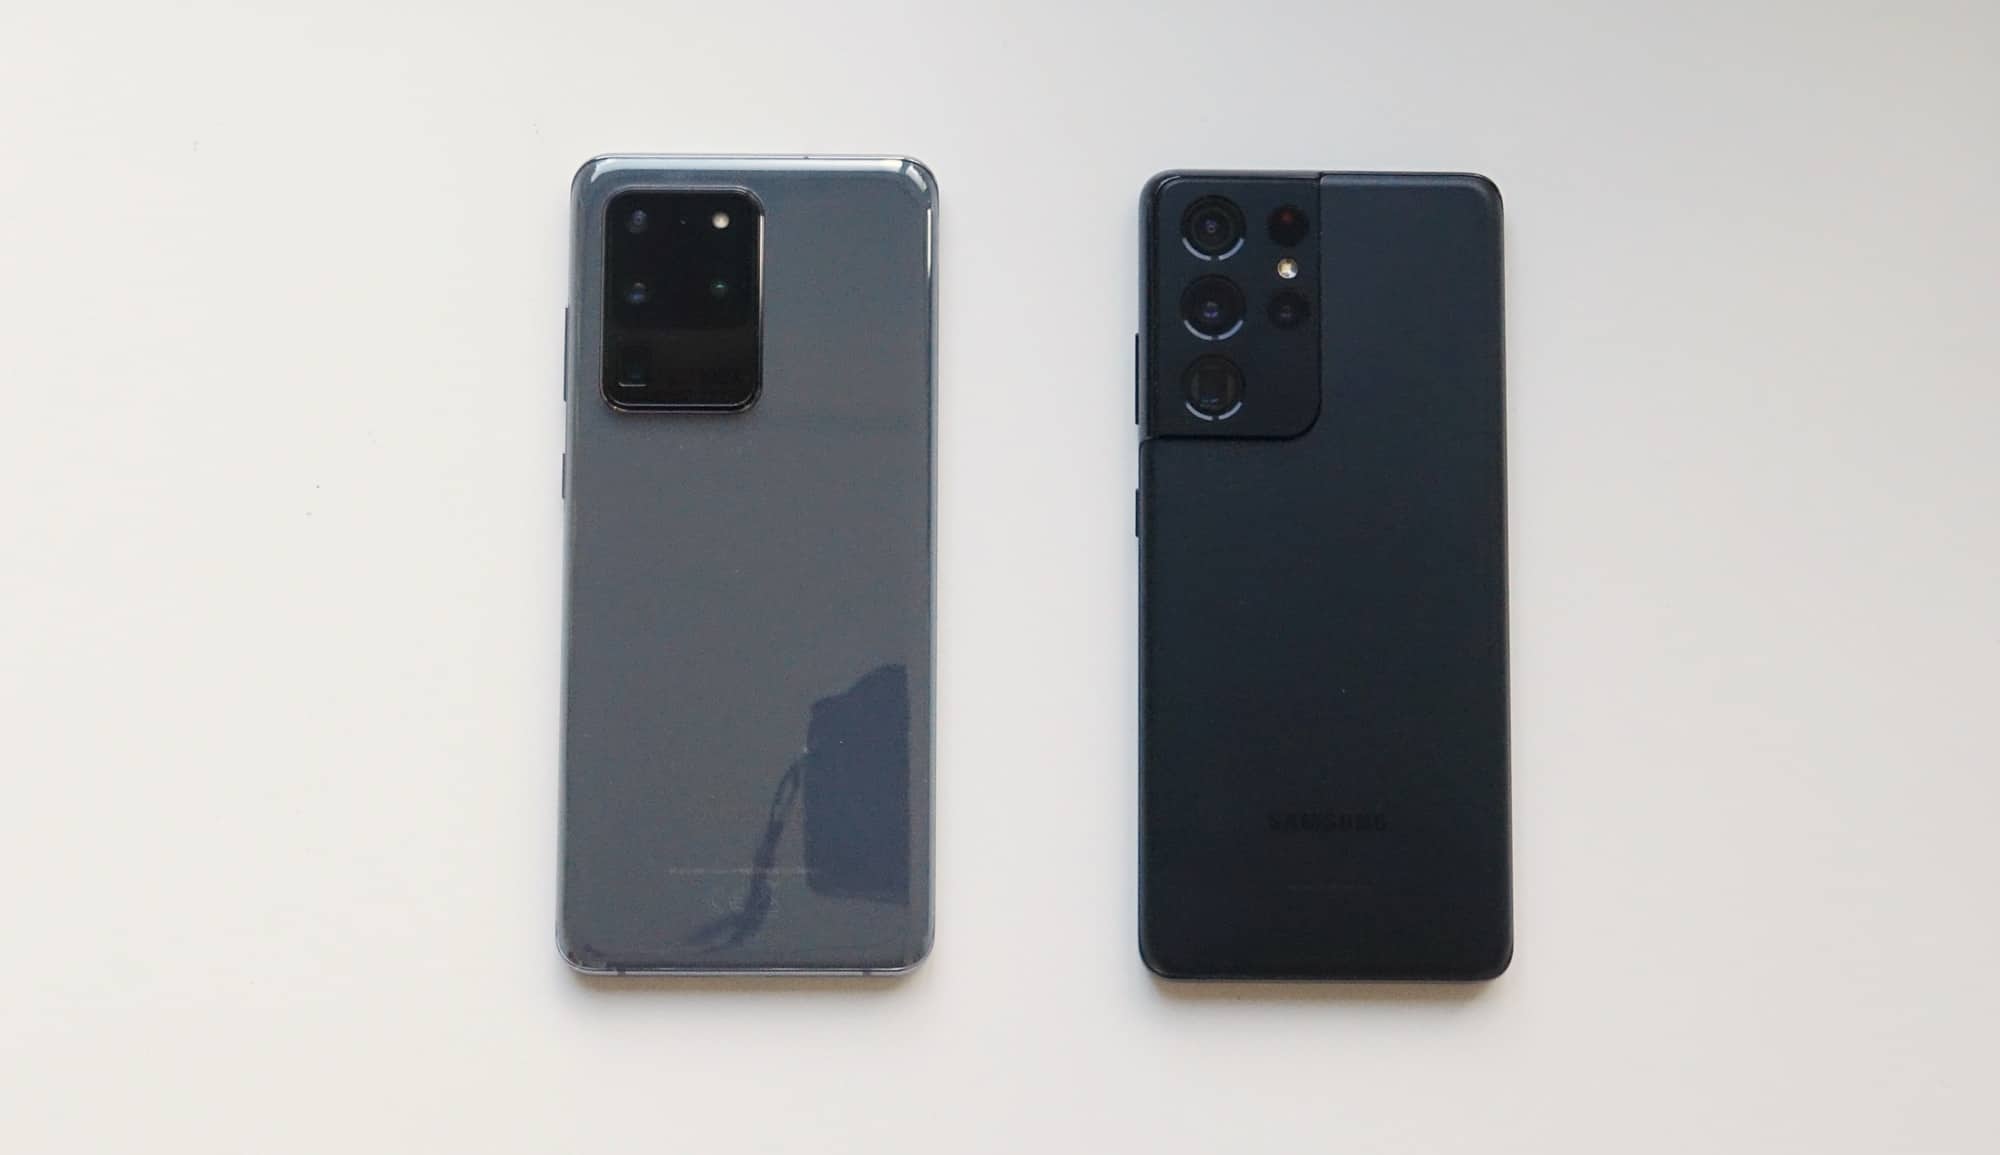 Samsung Galaxy S20 Ultra 5G (left) vs Samsung Galaxy S21 Ultra 5G (right)